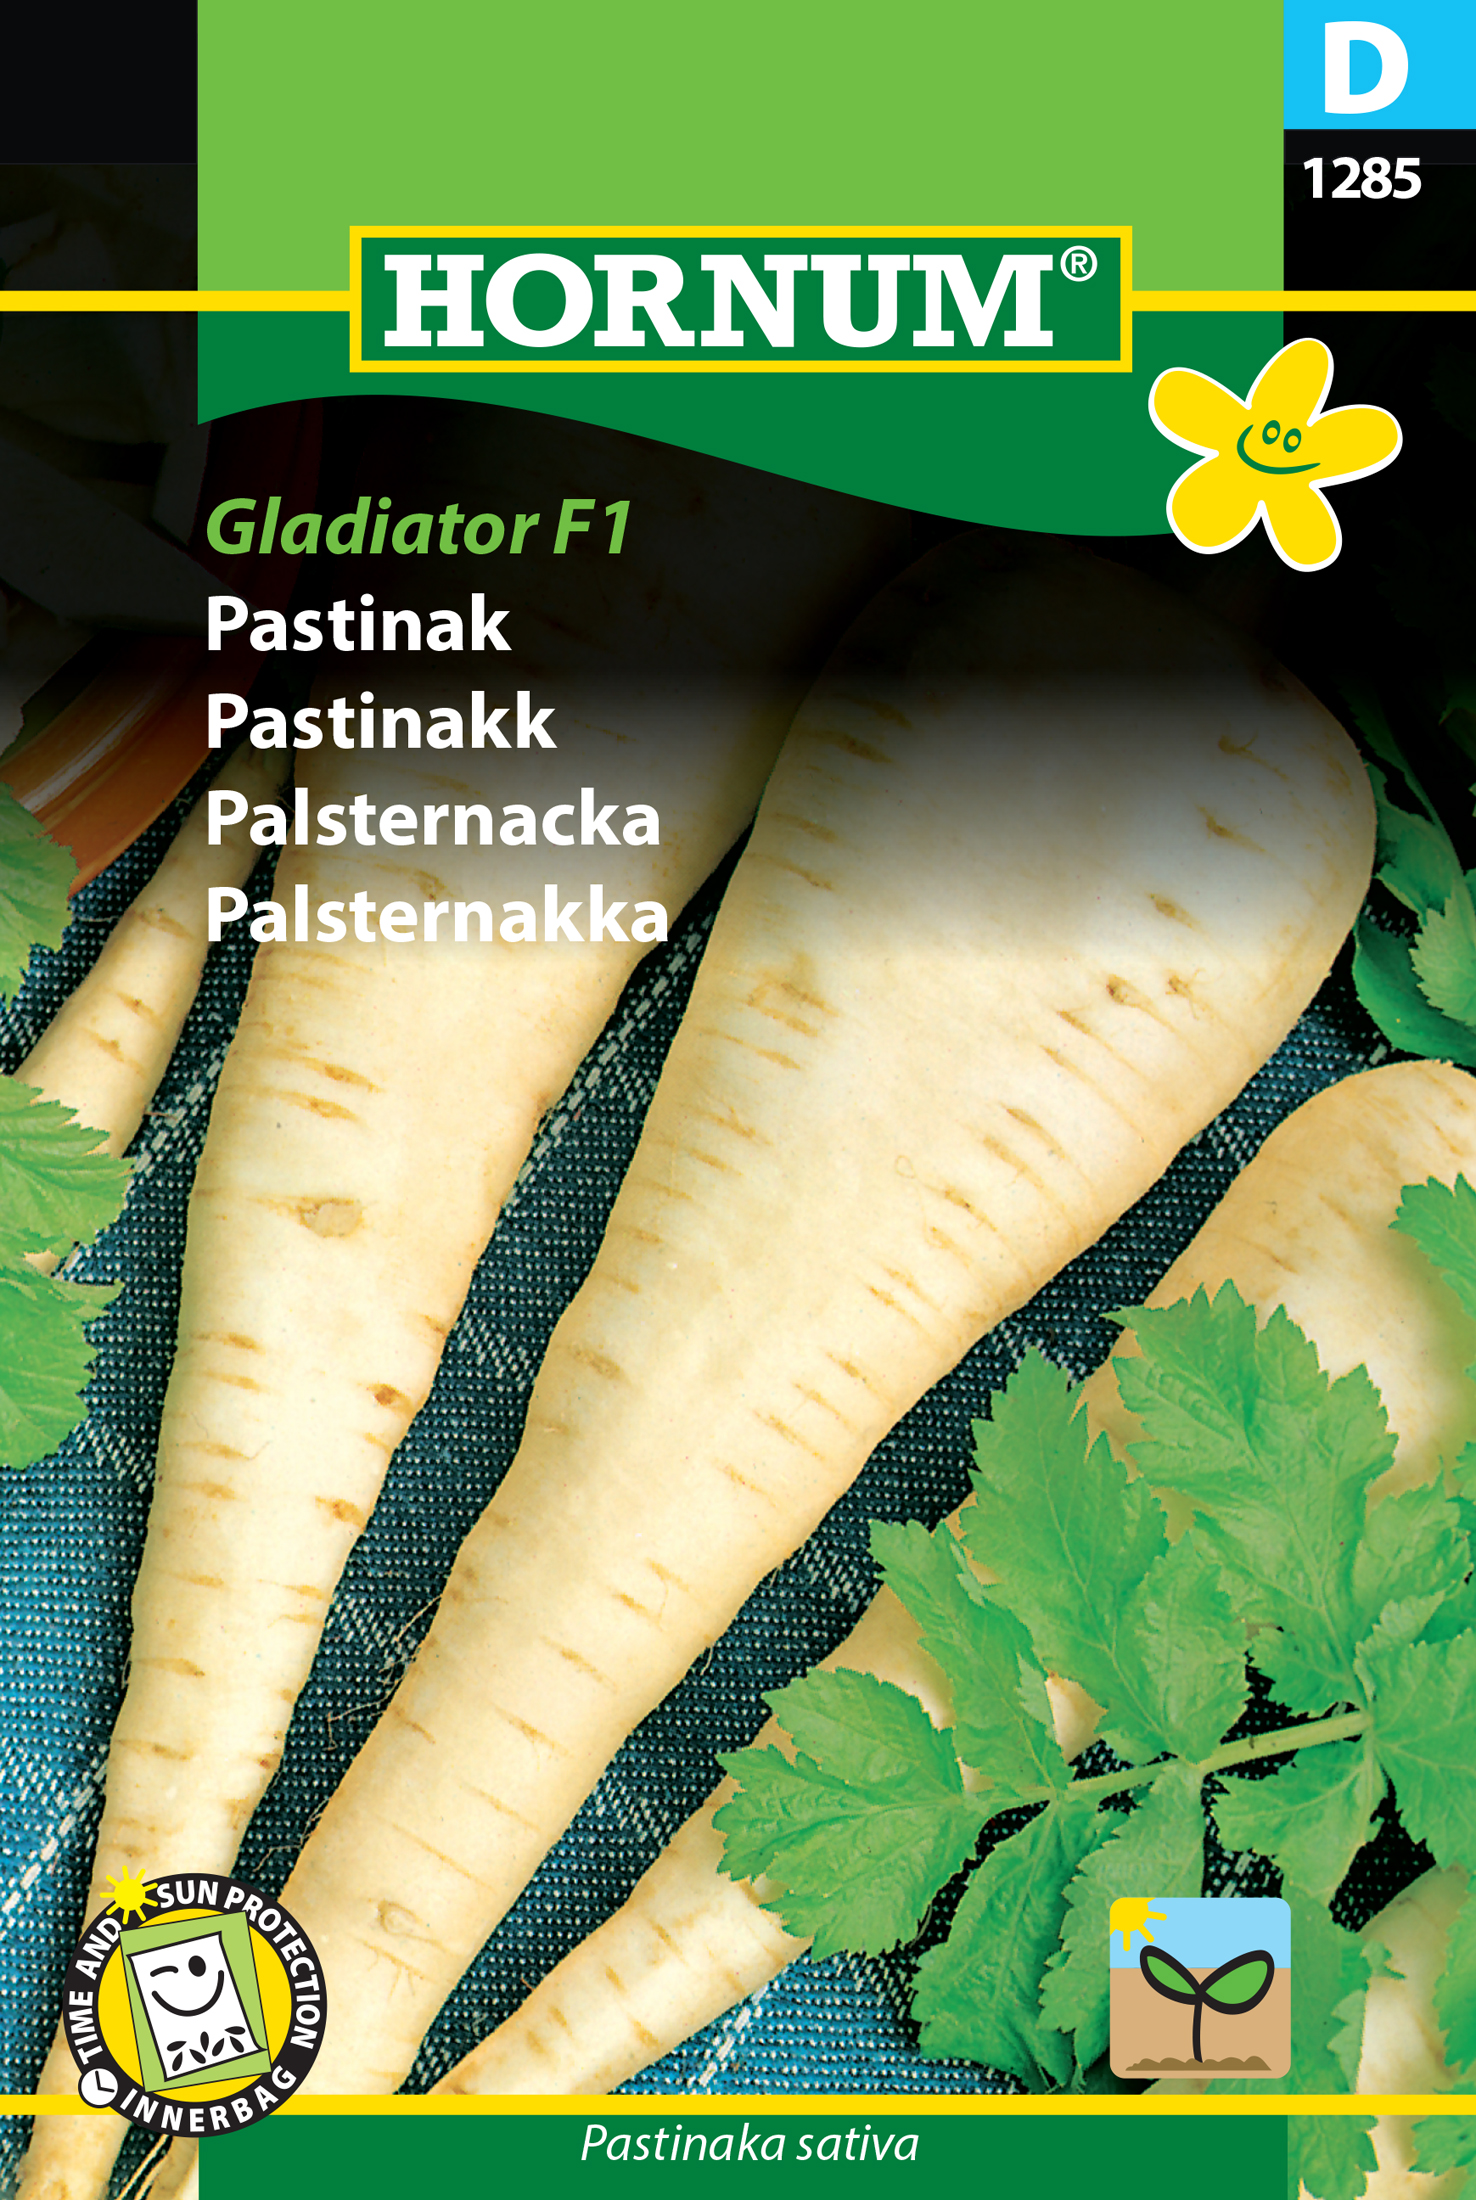 Palsternacka ’Gladiator’ F1 frö